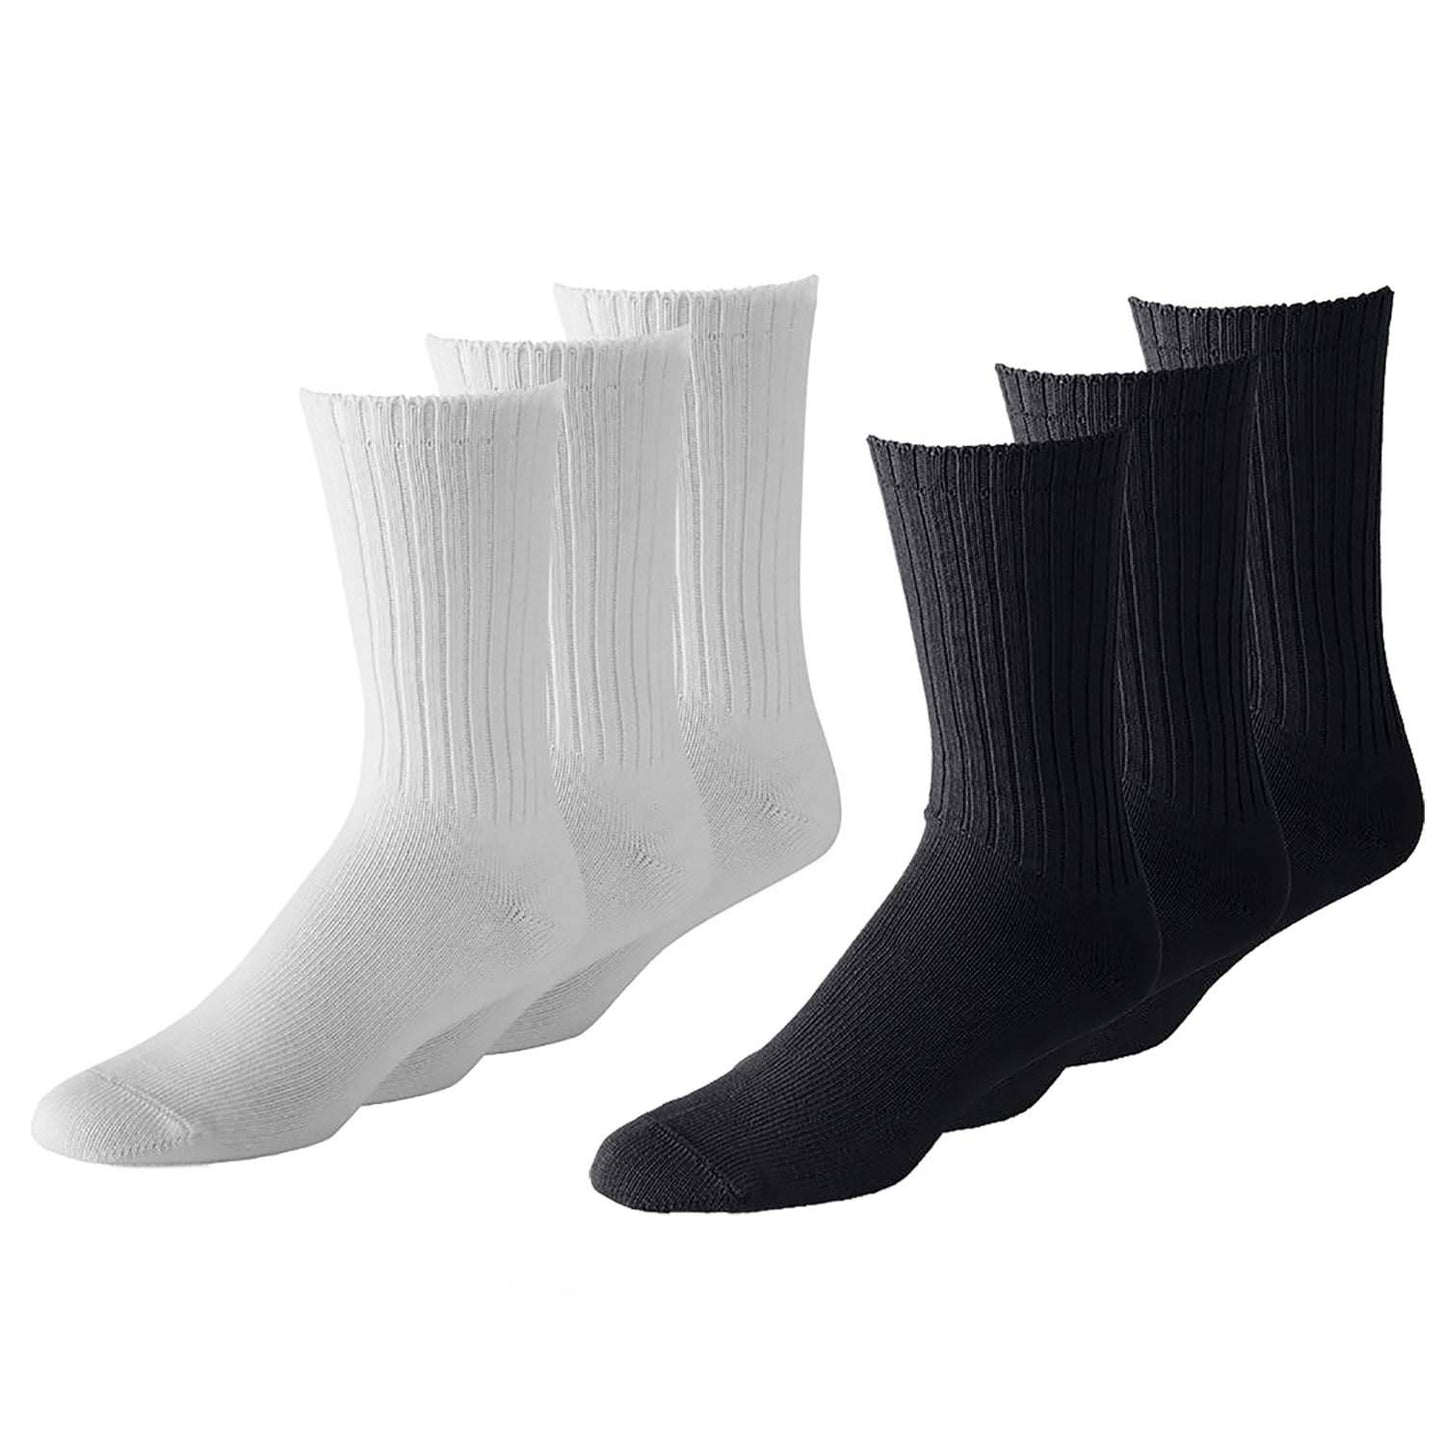 Unisex Crew Athletic Sports Cotton Socks  36 Pack